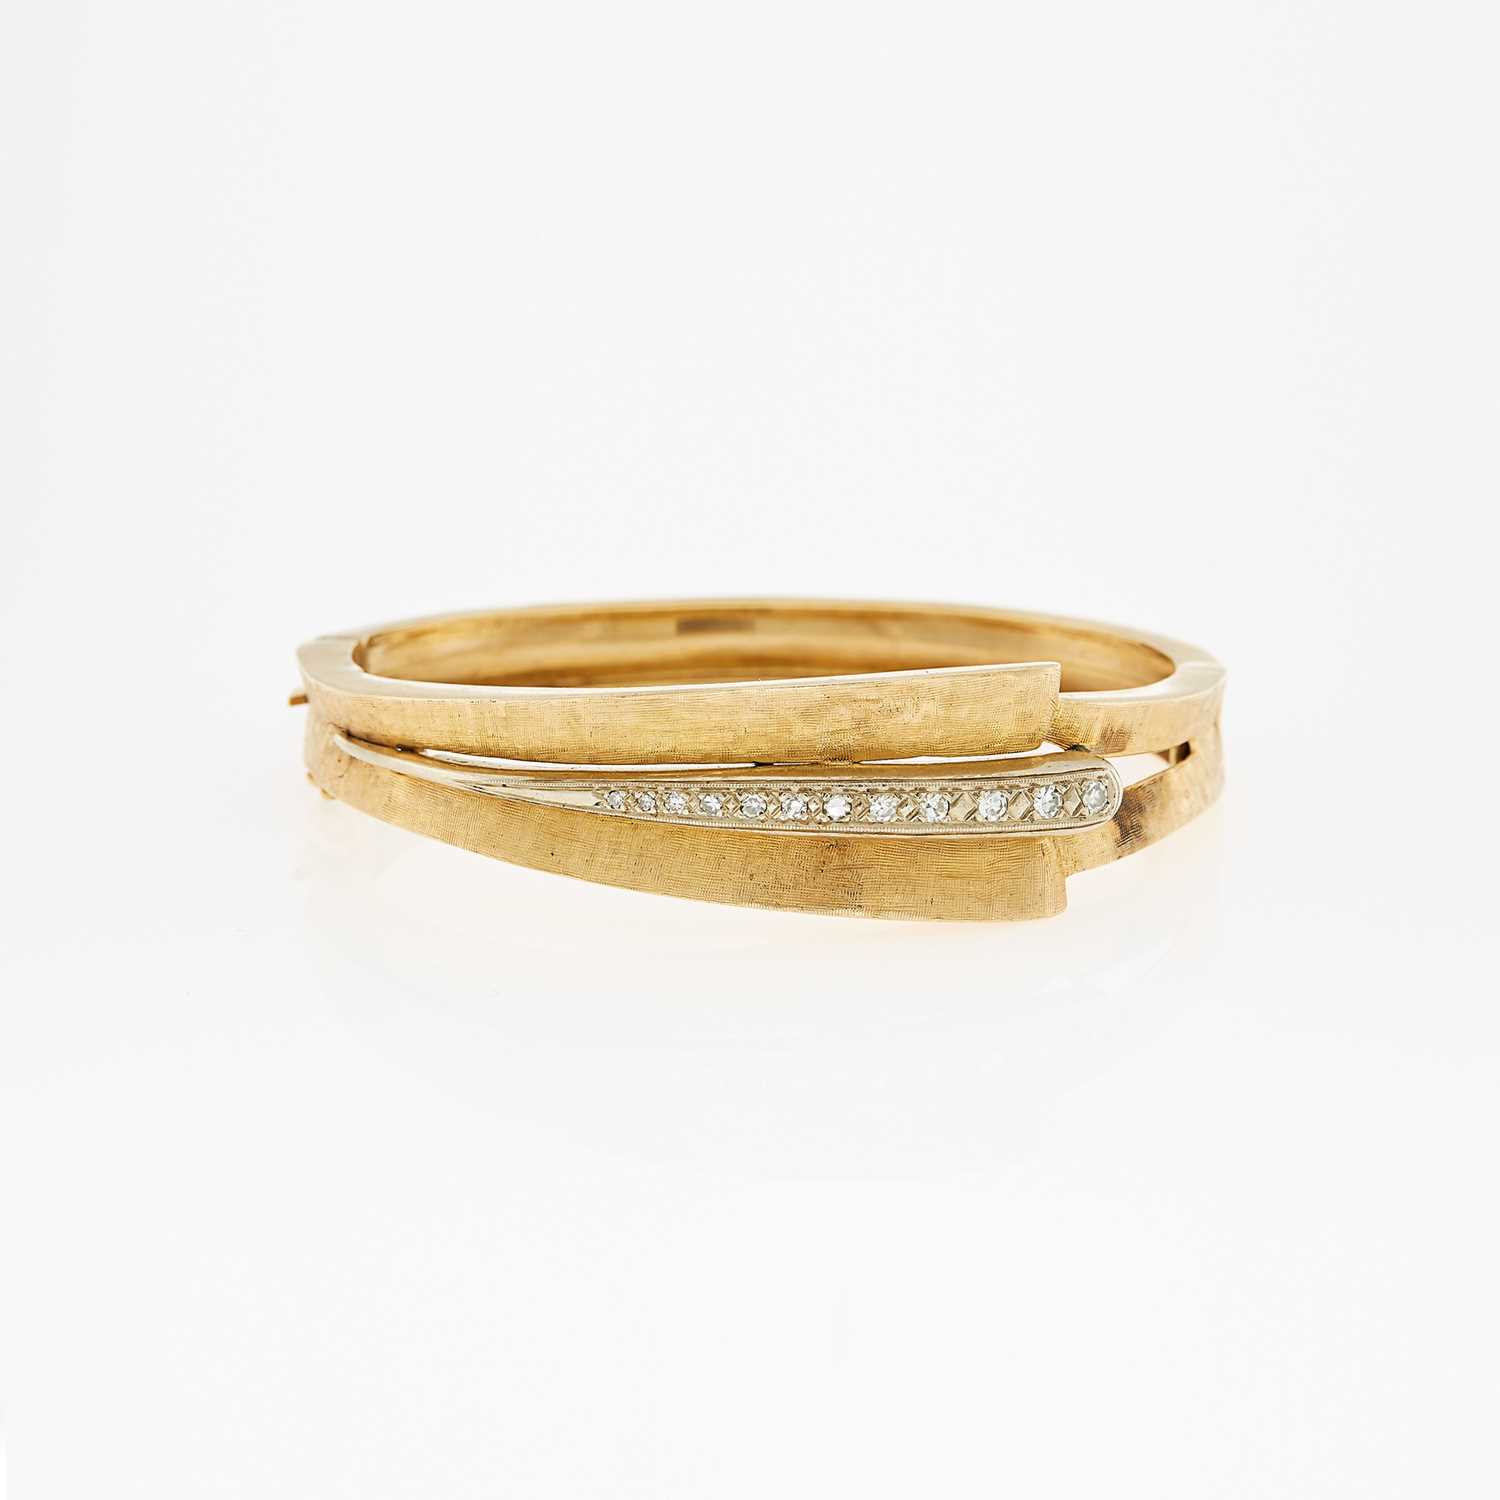 Lot 1100 - Two-Color Gold and Diamond Bangle Bracelet